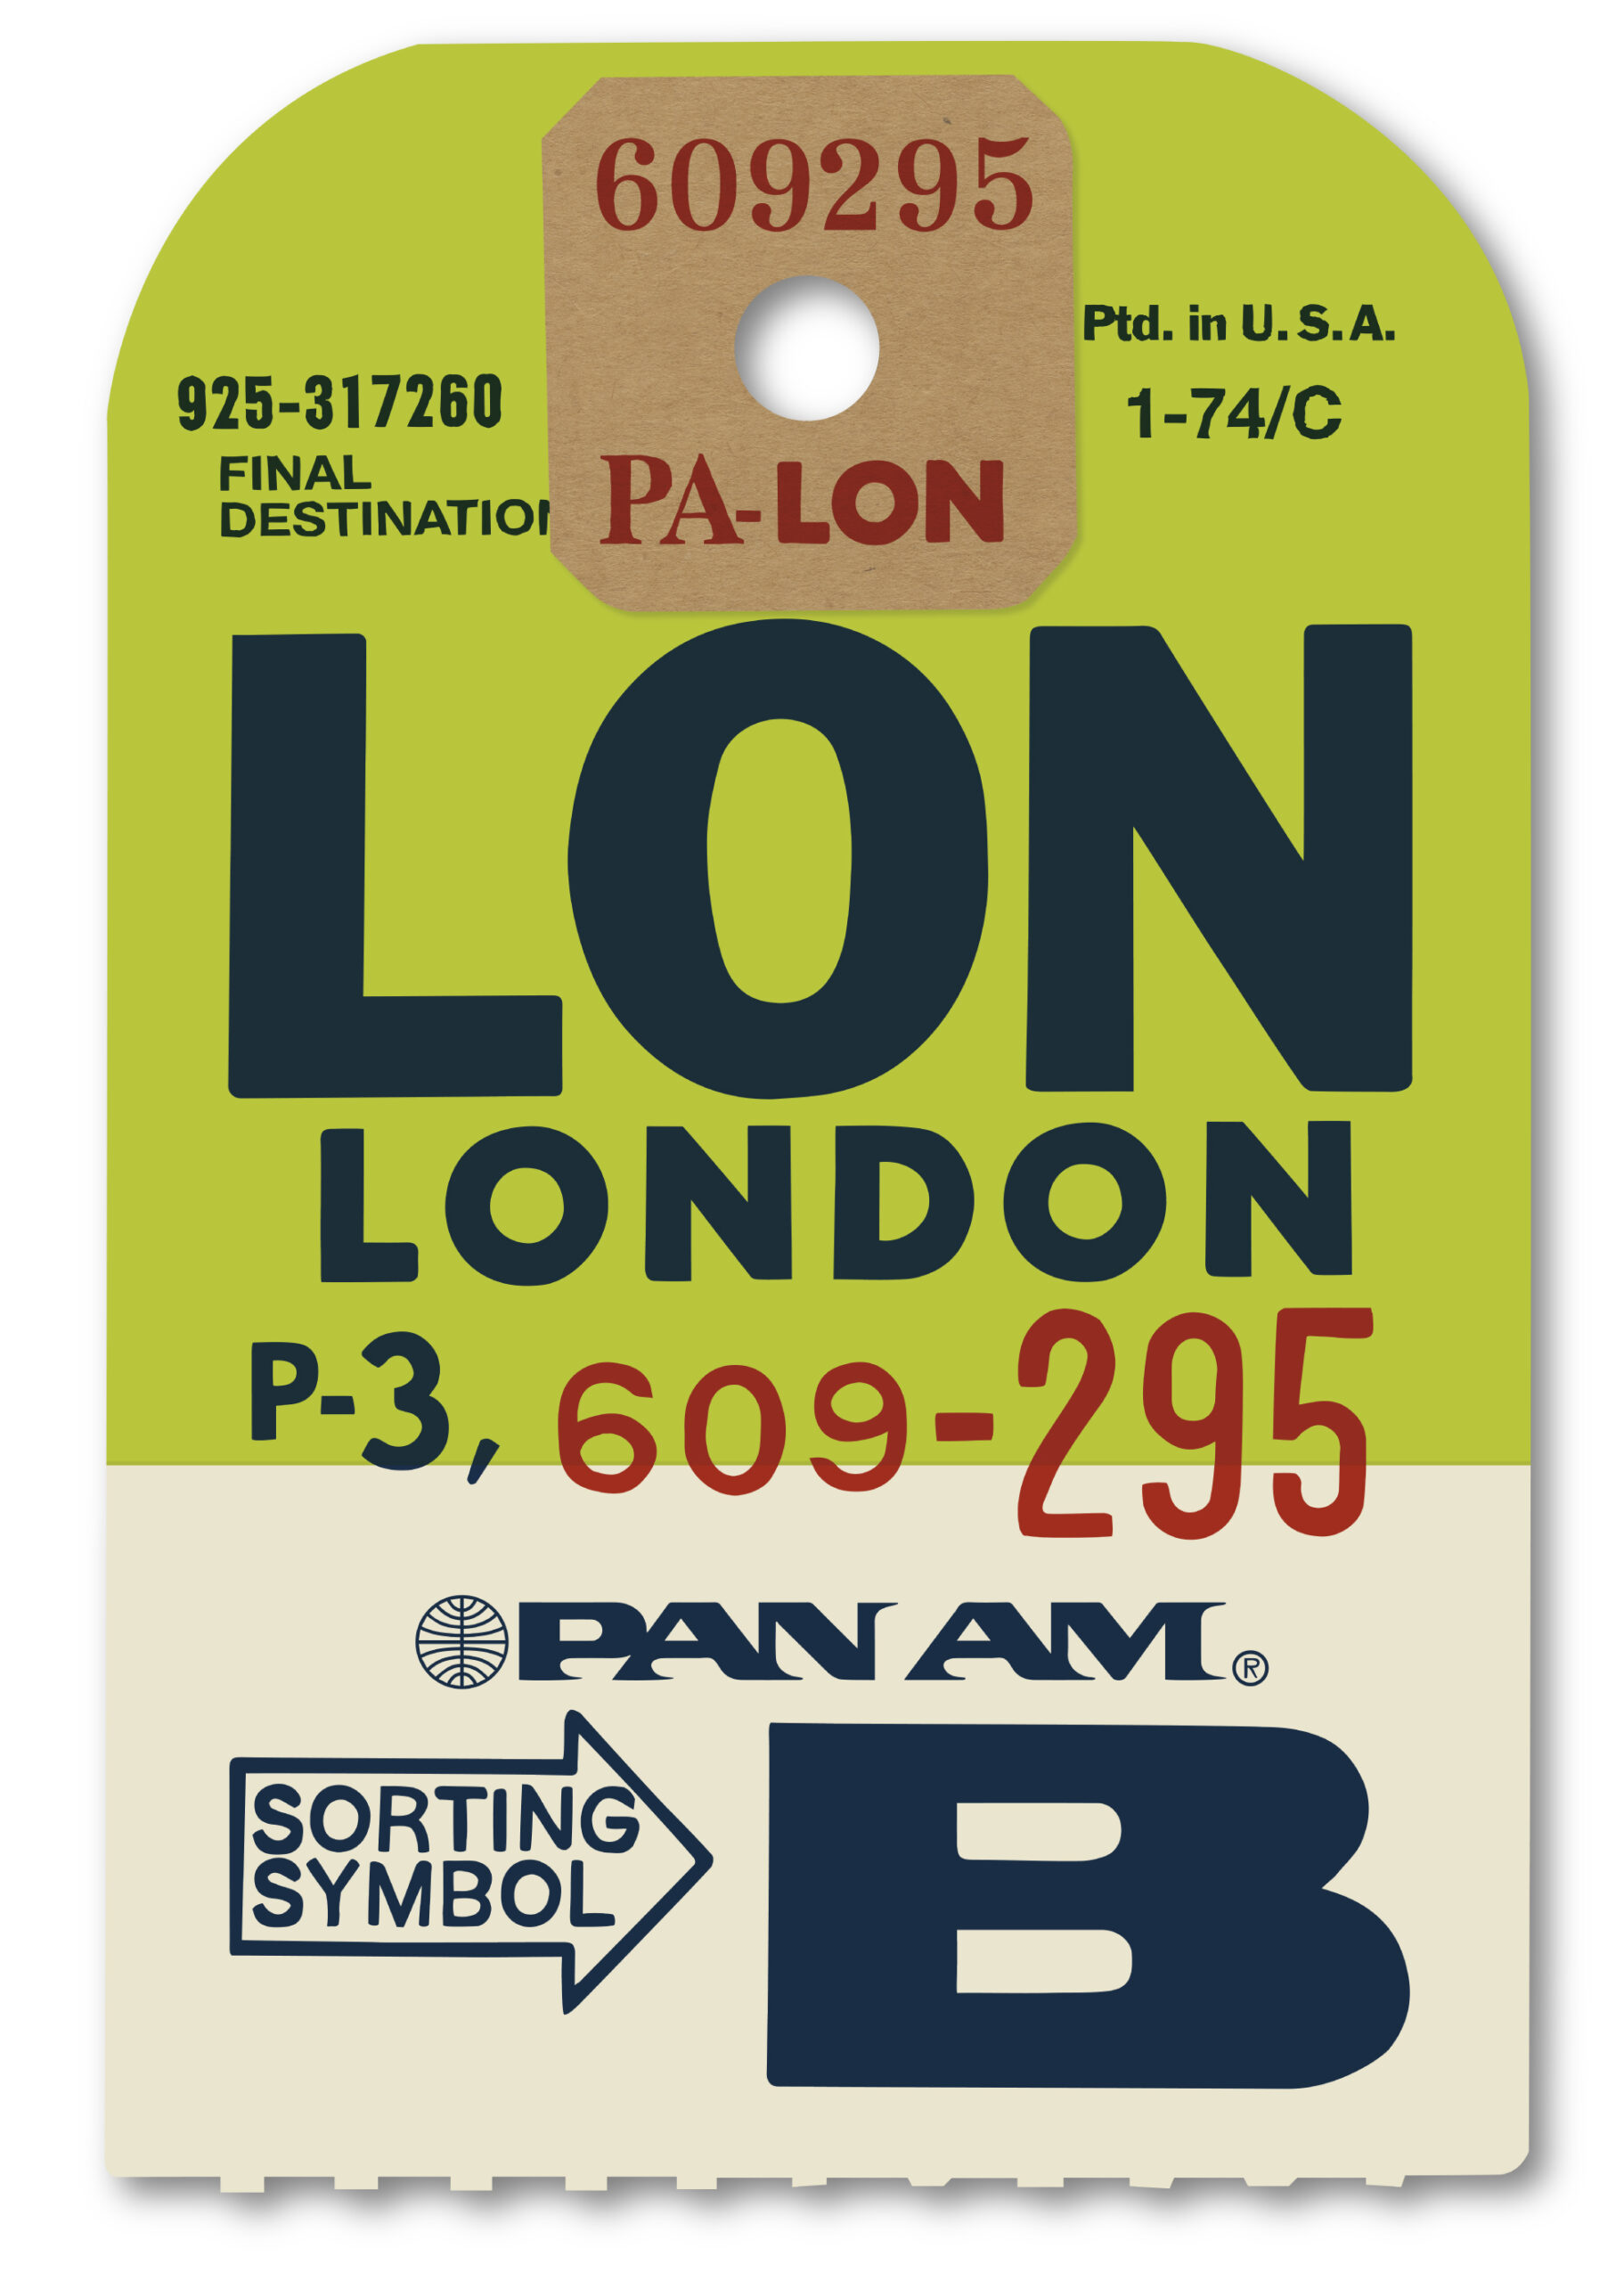 London Pan Am Luggage Label